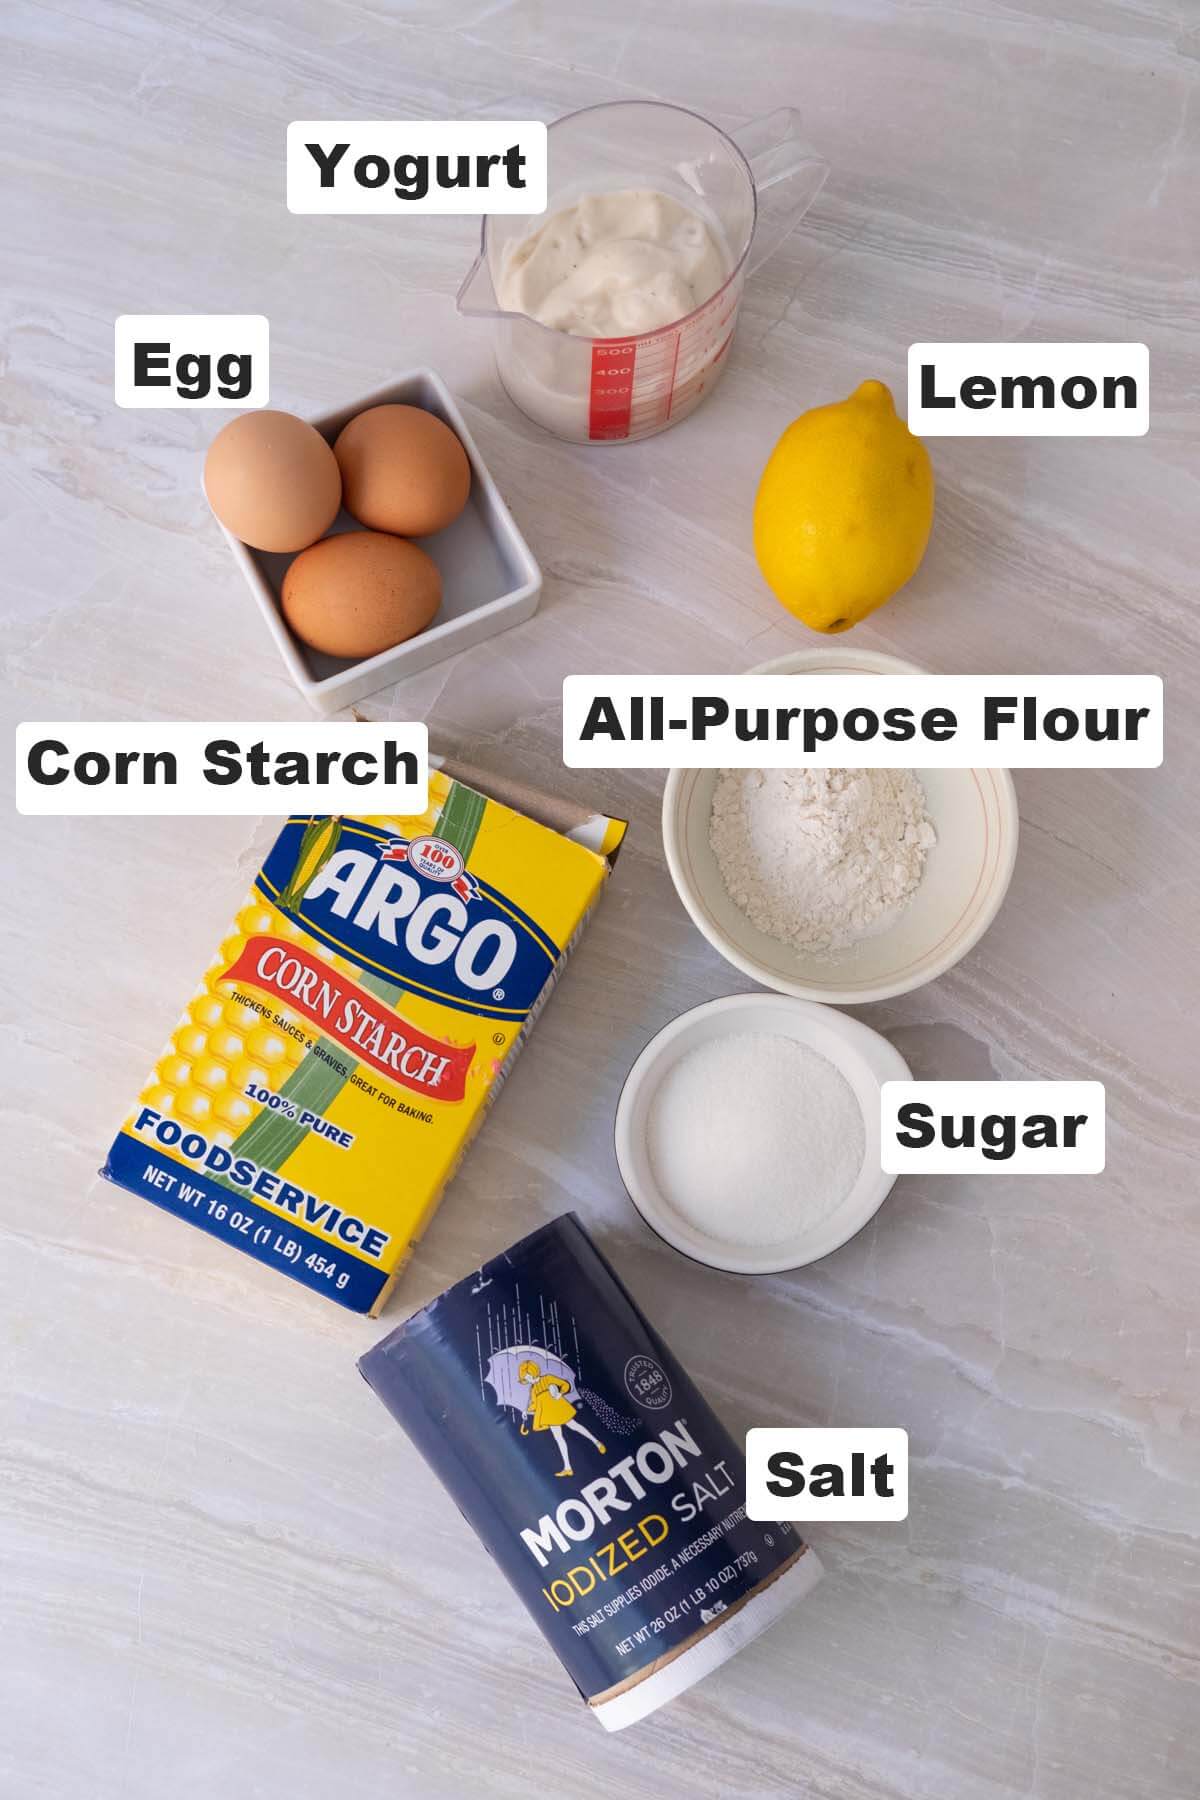 Yogurt cake ingredients: yogurt, egg, lemon, all-purpose flour, corn starch, salt and sugar. 